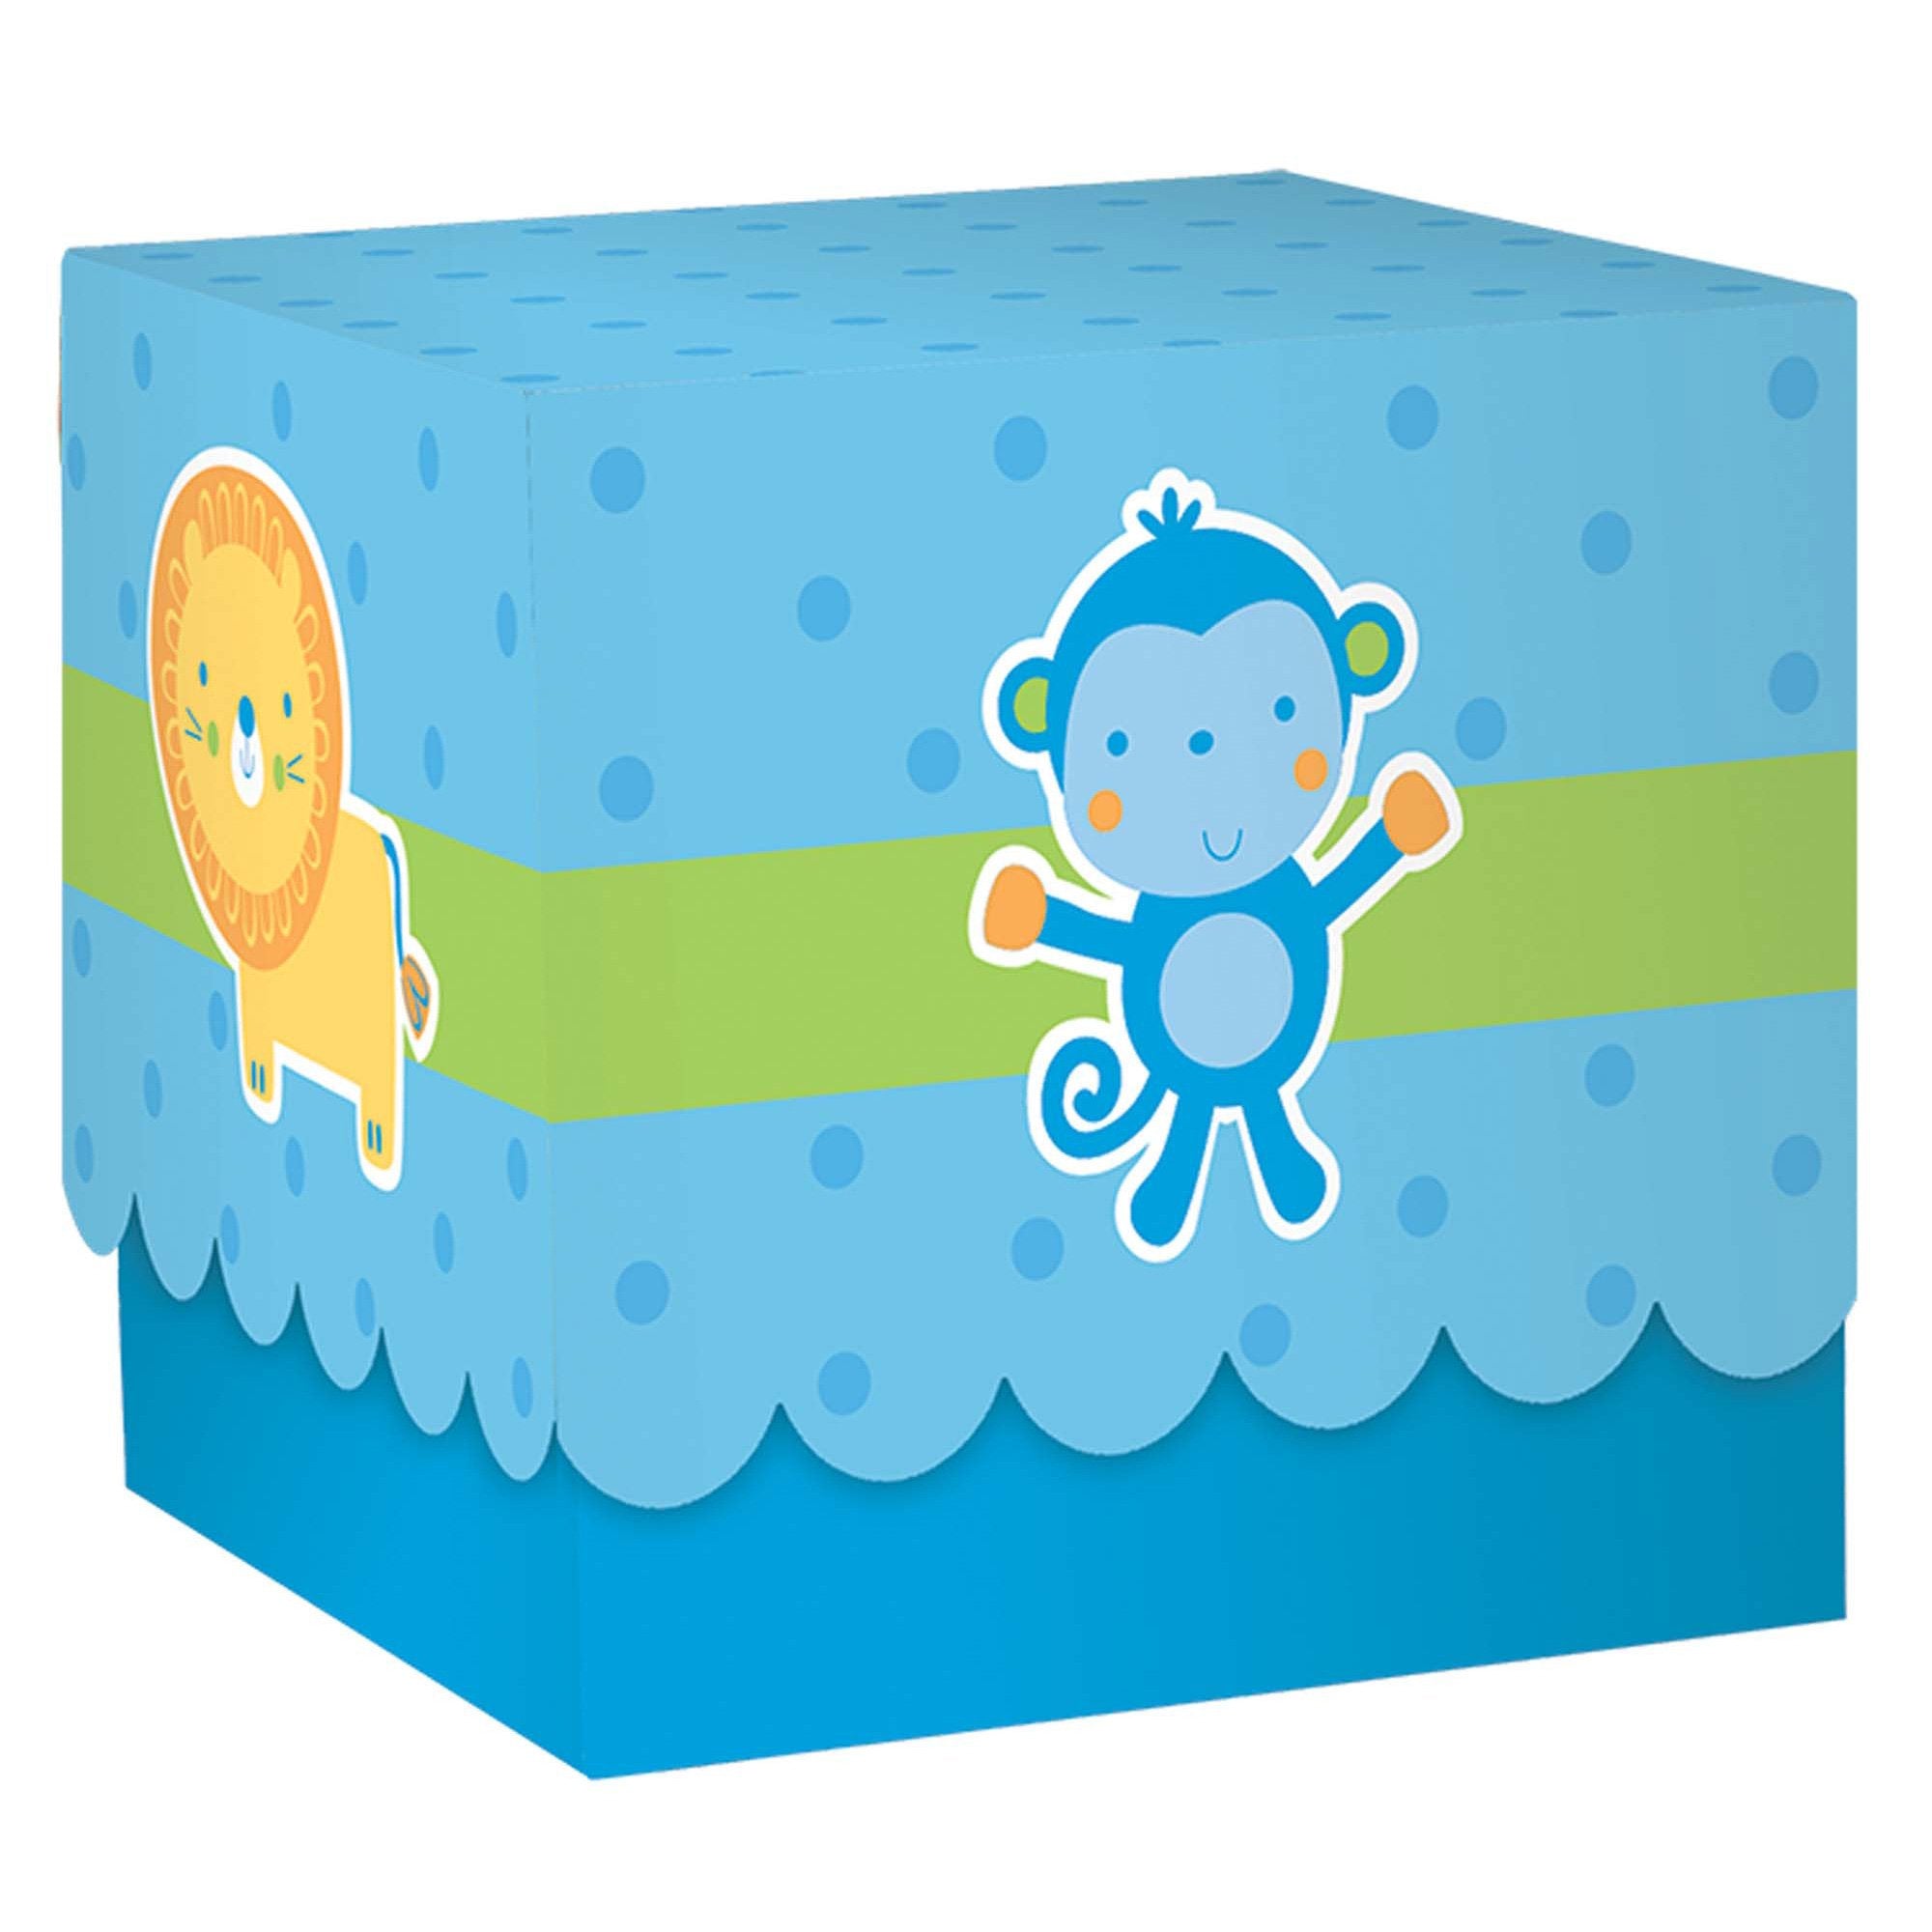 Baby Shower Blue Printed Paper Boxes 24pcs - Party Centre